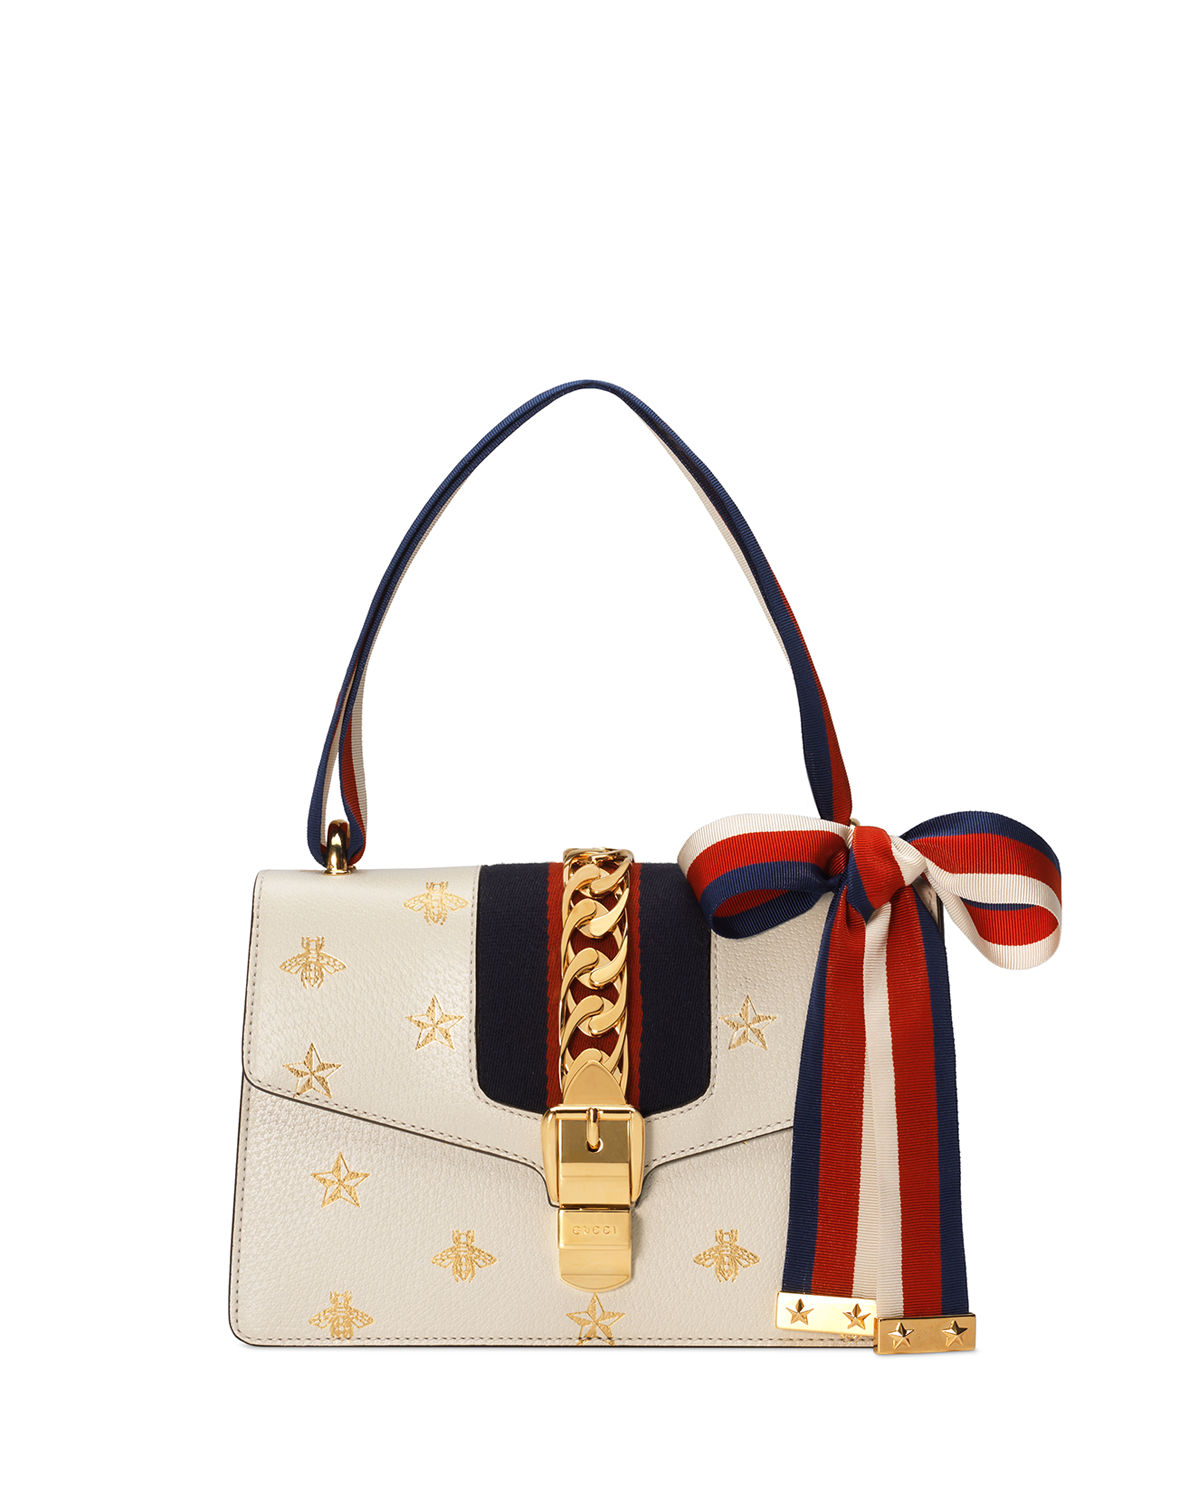 Gucci Sylvie Small Bee & Star Shoulder Bag, White/gold | ModeSens